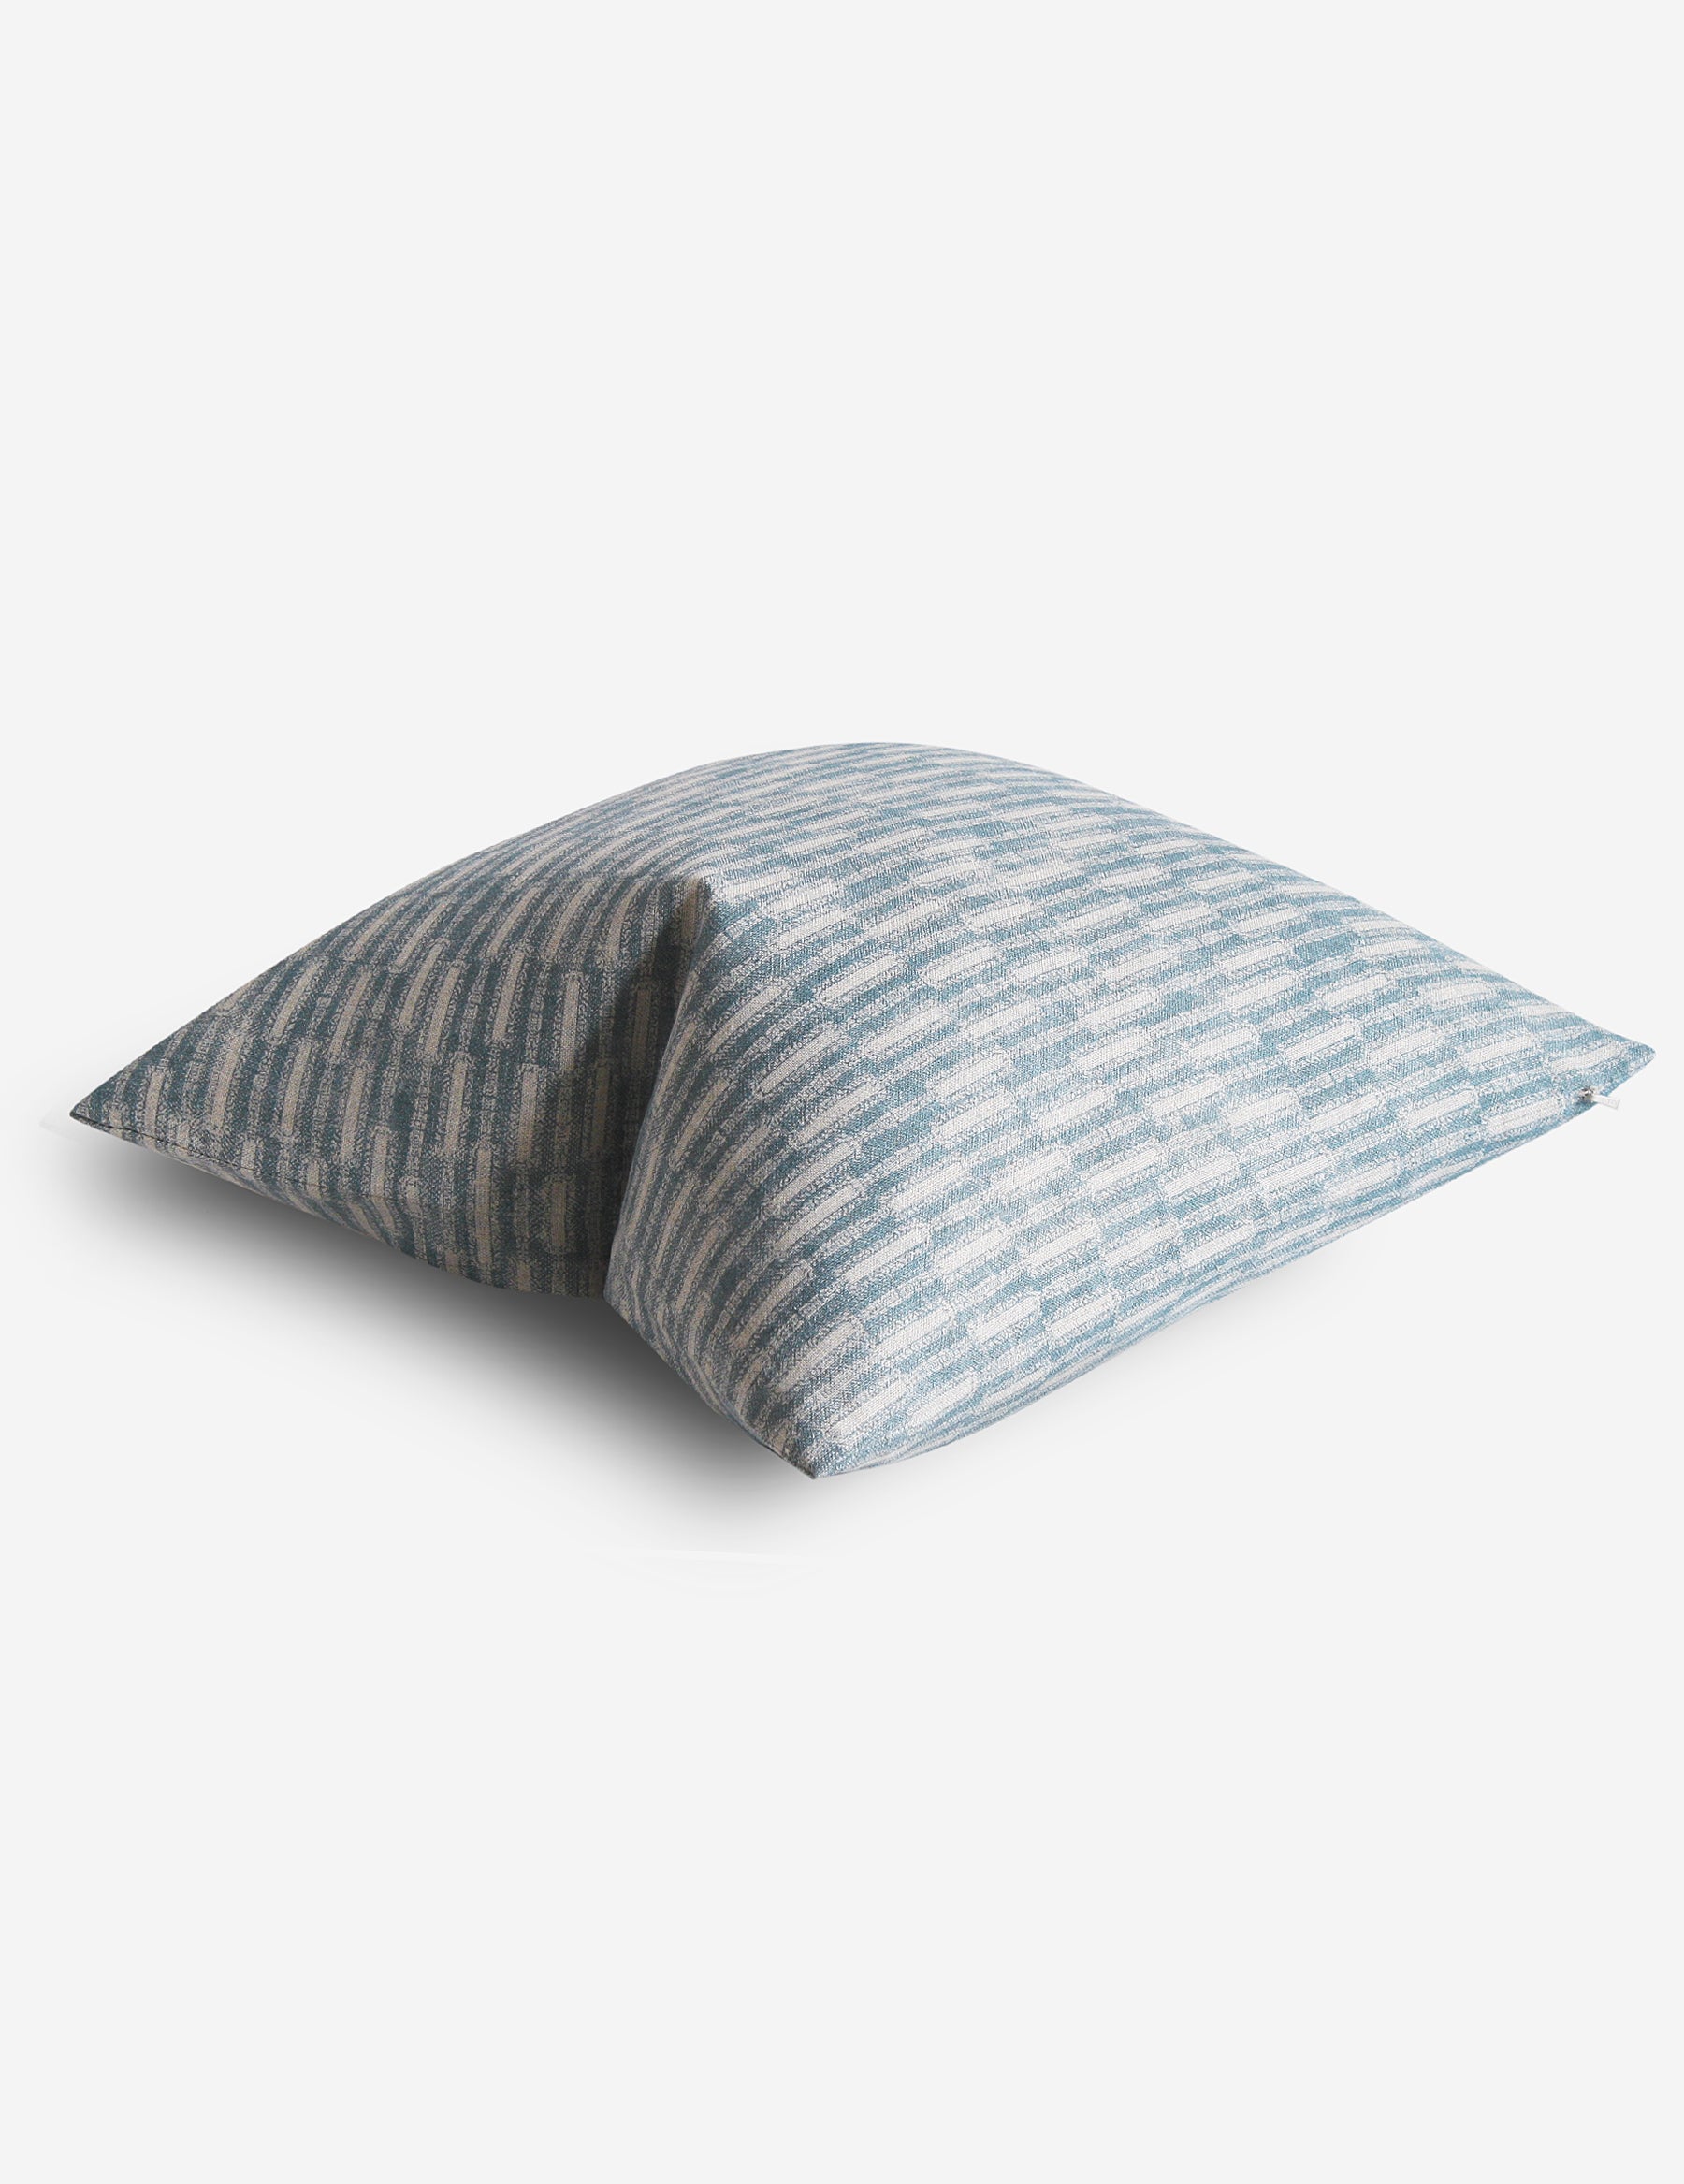 Lacuna Pillow / Azul